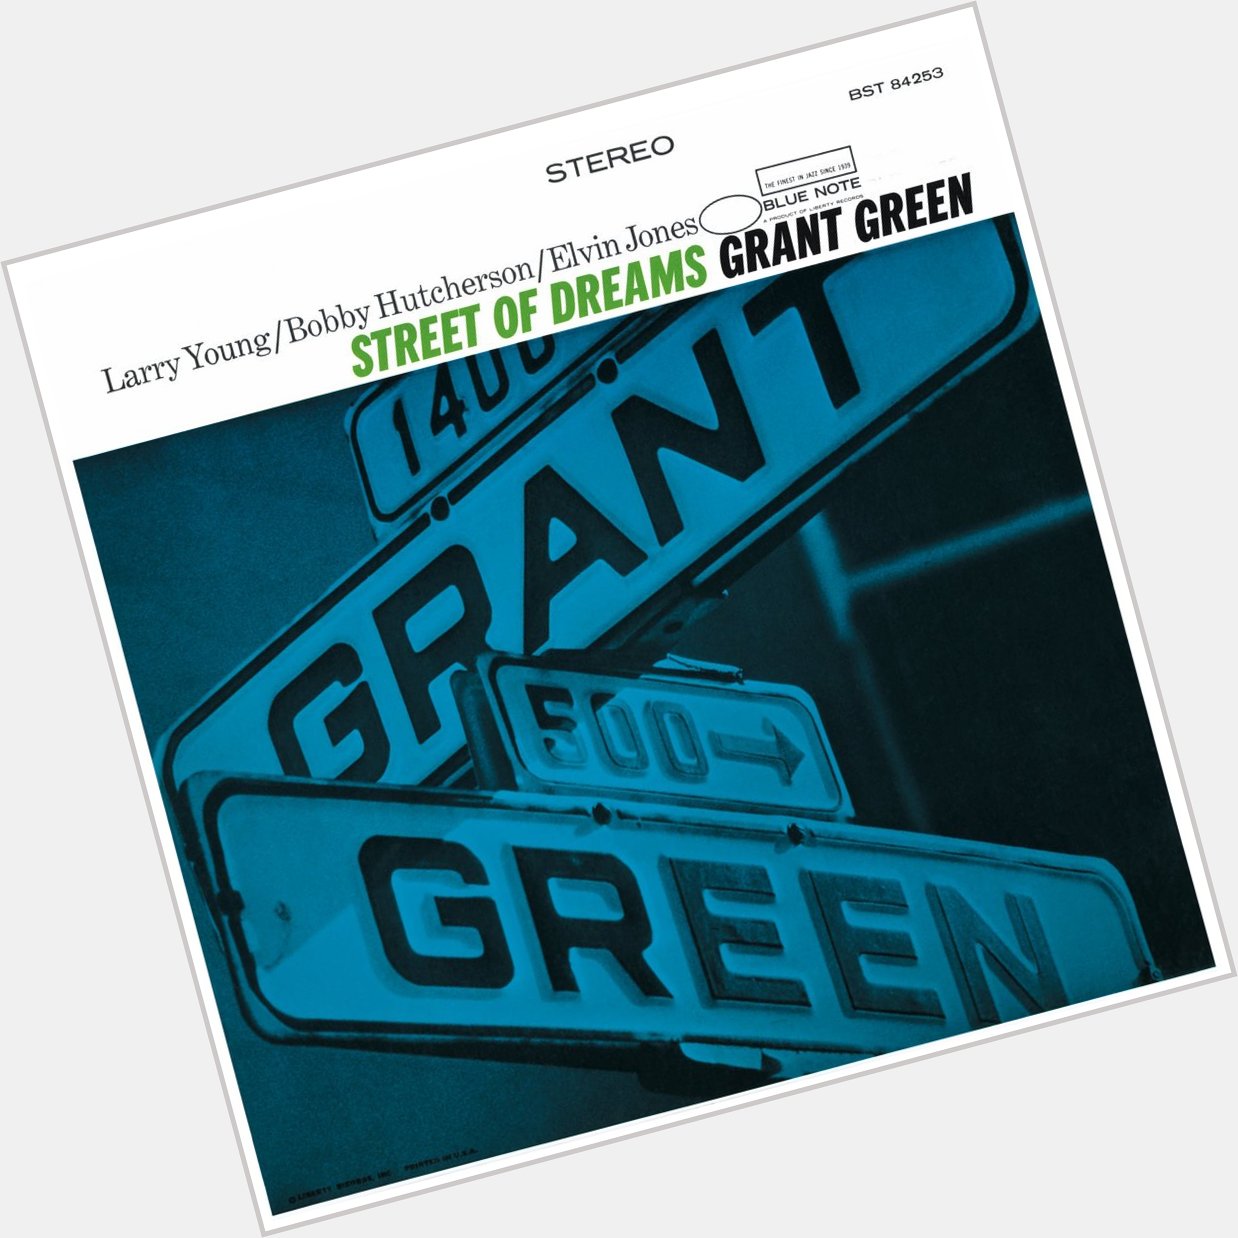 Happy 84th birthday, Grant Green.  